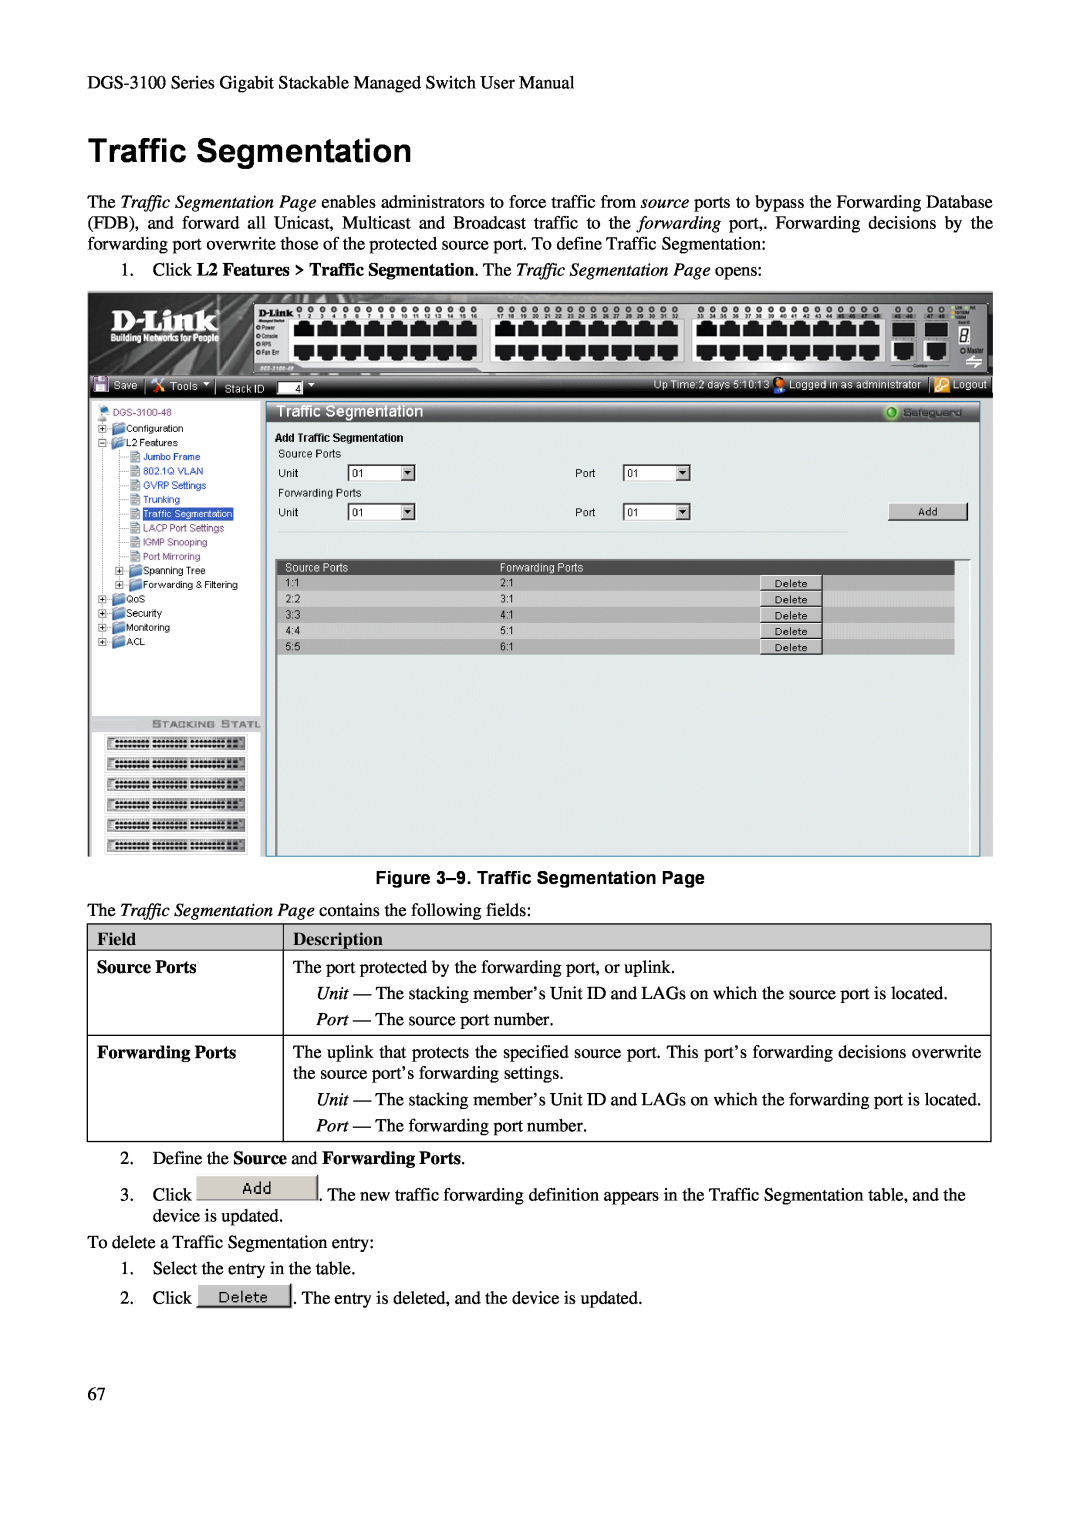 D-Link DGS-3100 user manual 9. Traffic Segmentation Page, Field, Description, Source Ports, Forwarding Ports 